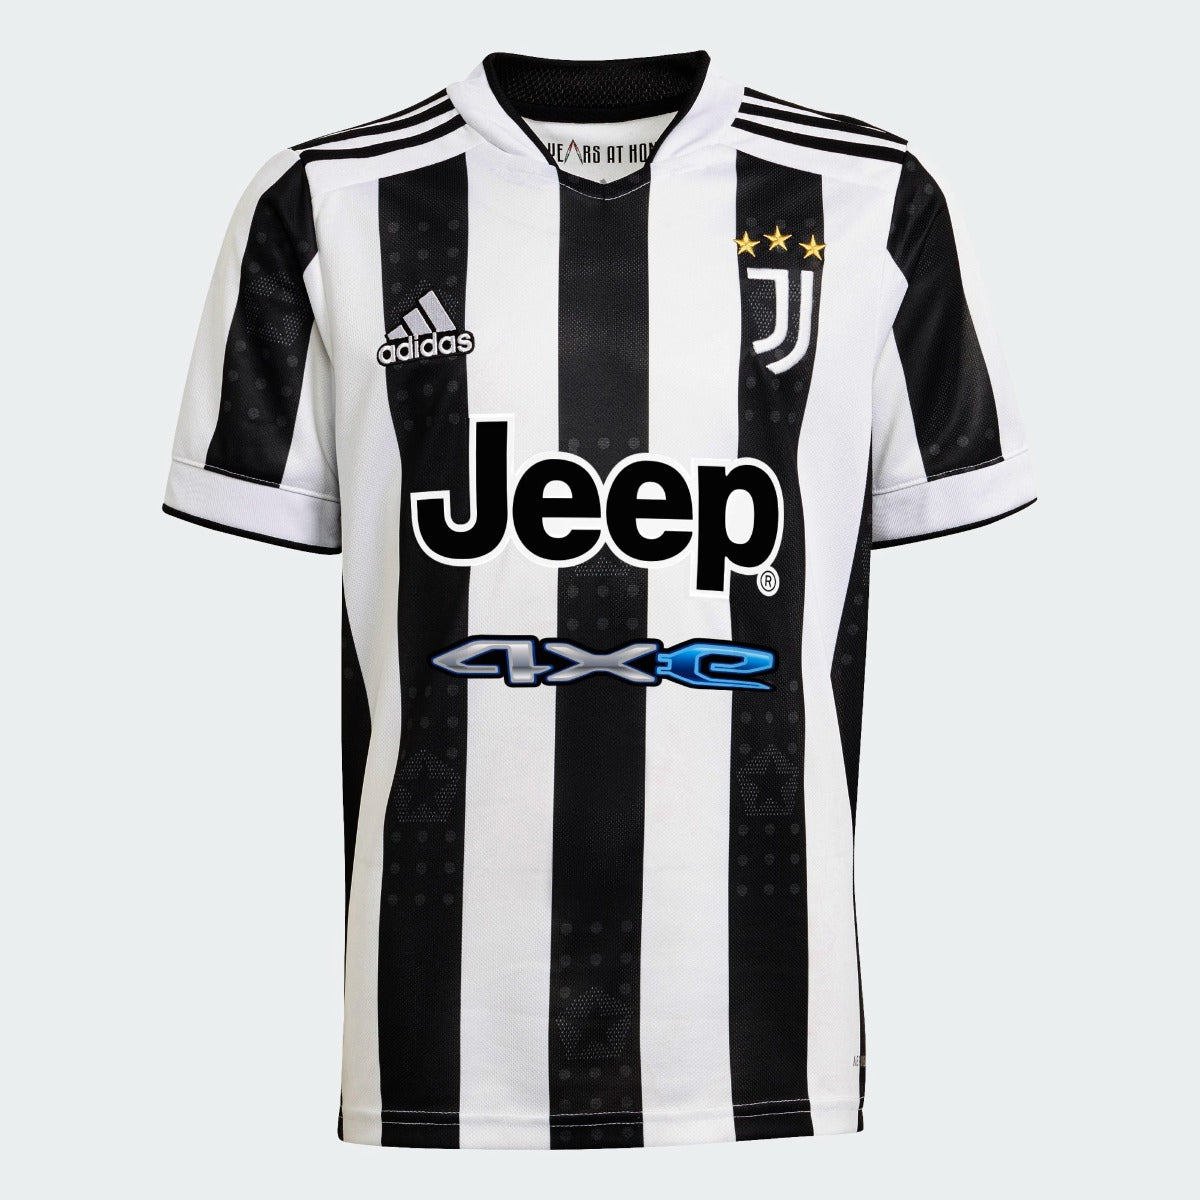 Adidas 2021-22 Juventus Youth Home Jersey - White-Black (Front)